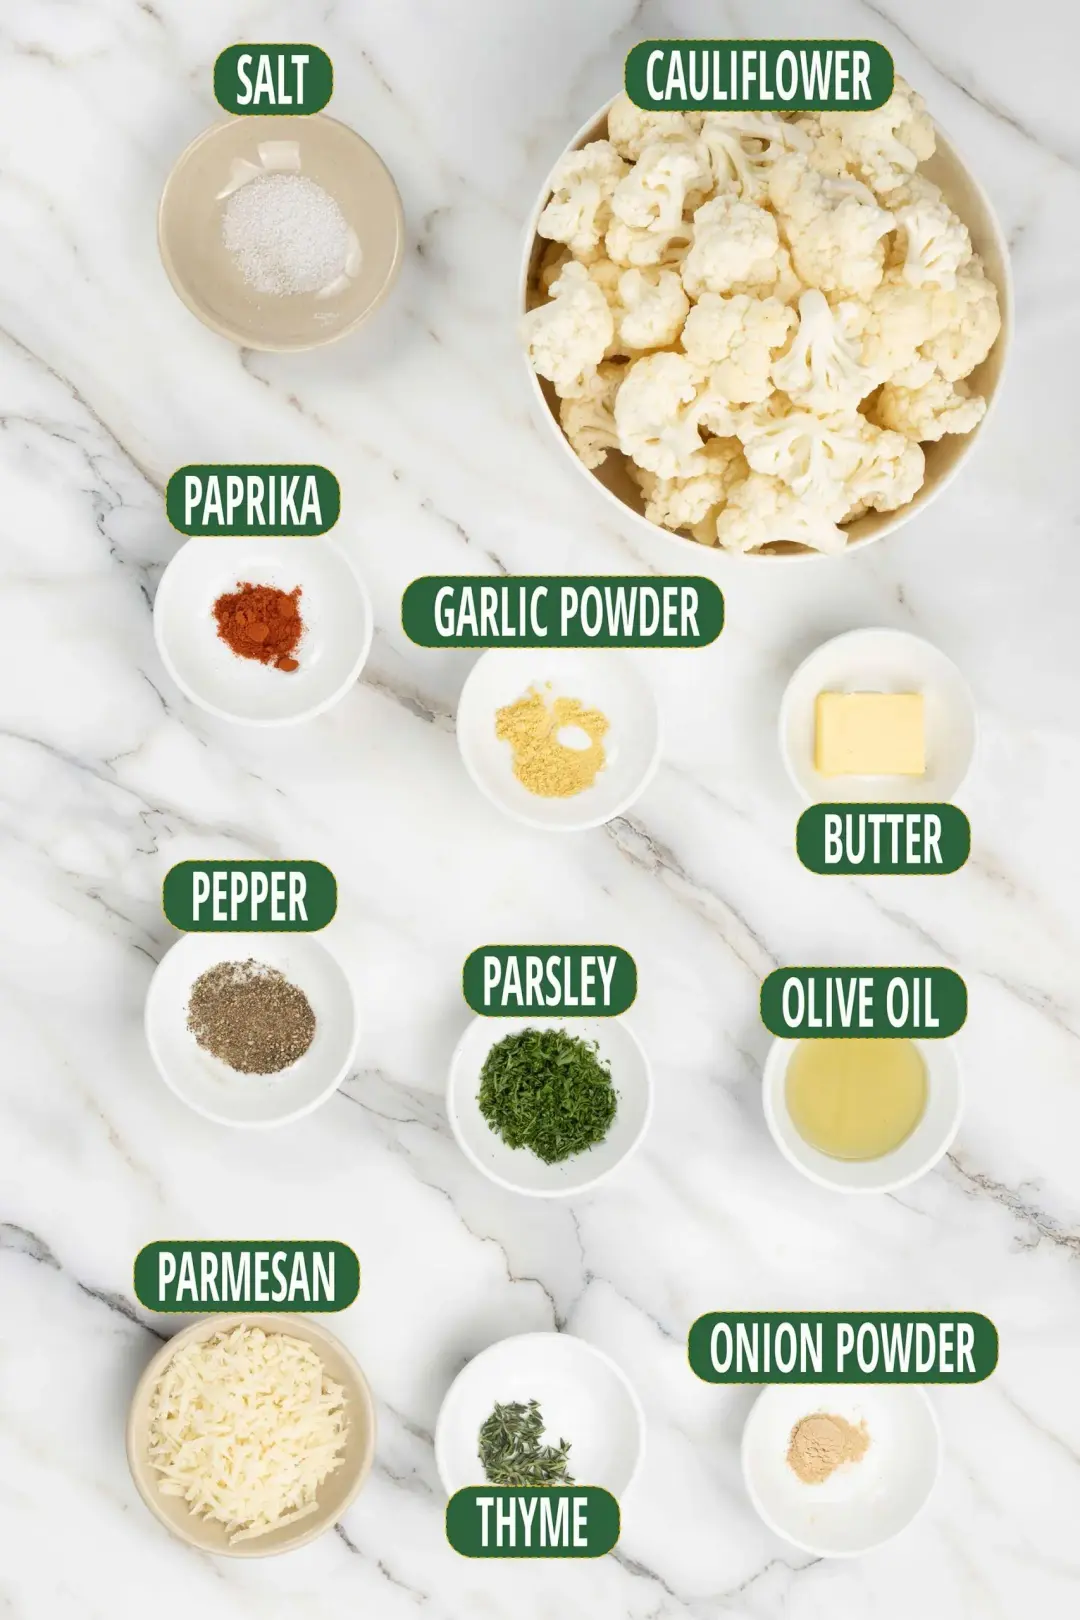 Roasted Cauliflower Ingredients scaled